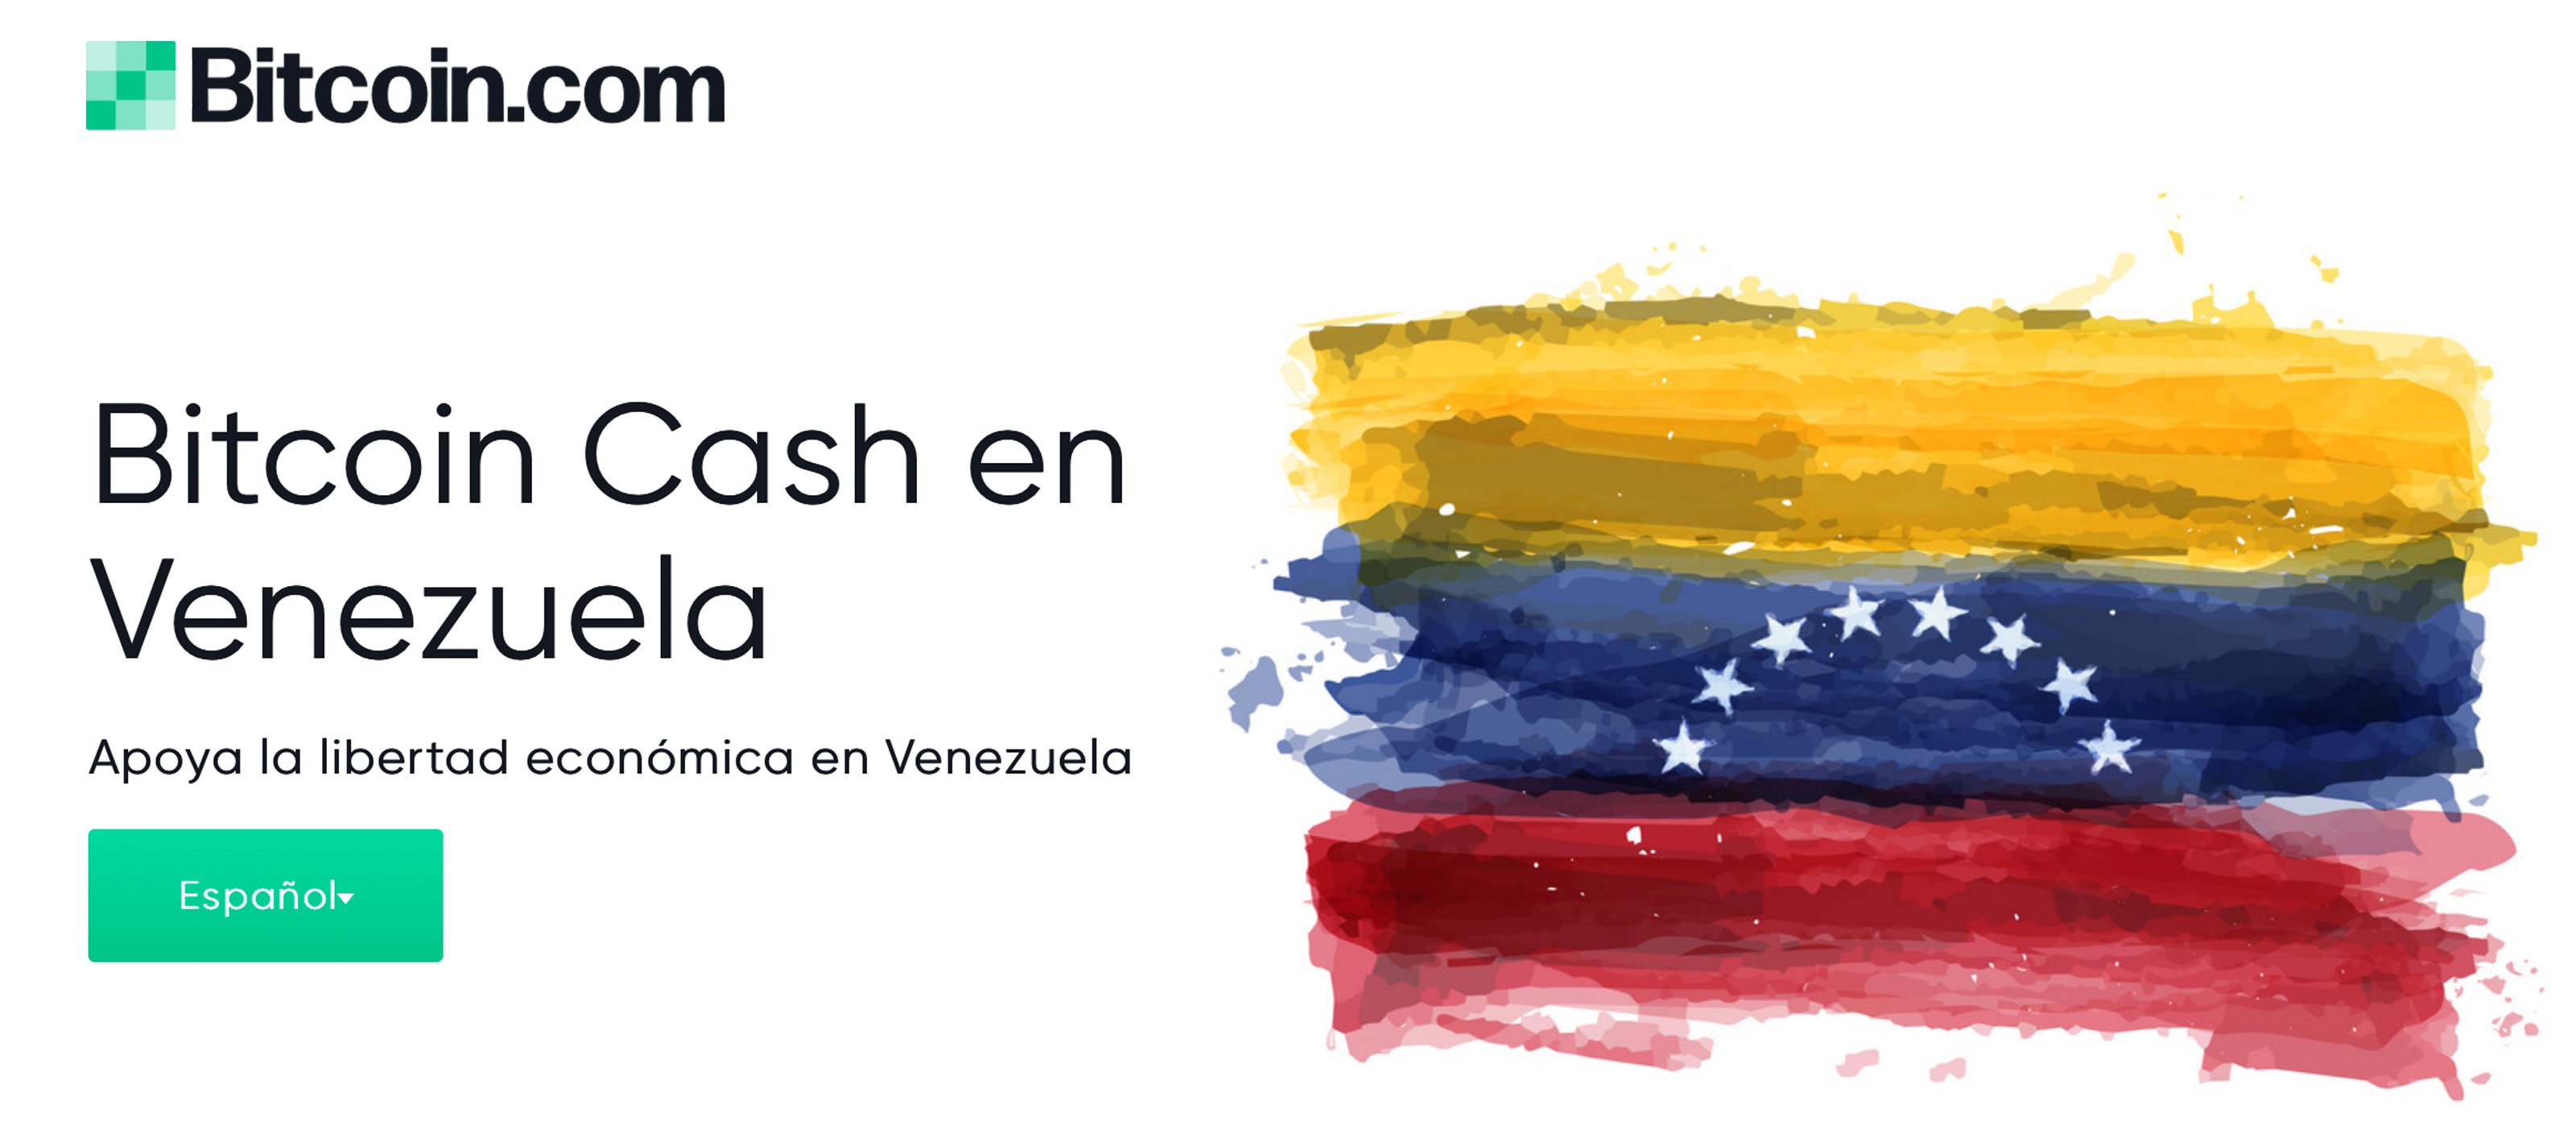 Over 200 Venezuelan Taxis Discover the Benefits of Bitcoin Cash 